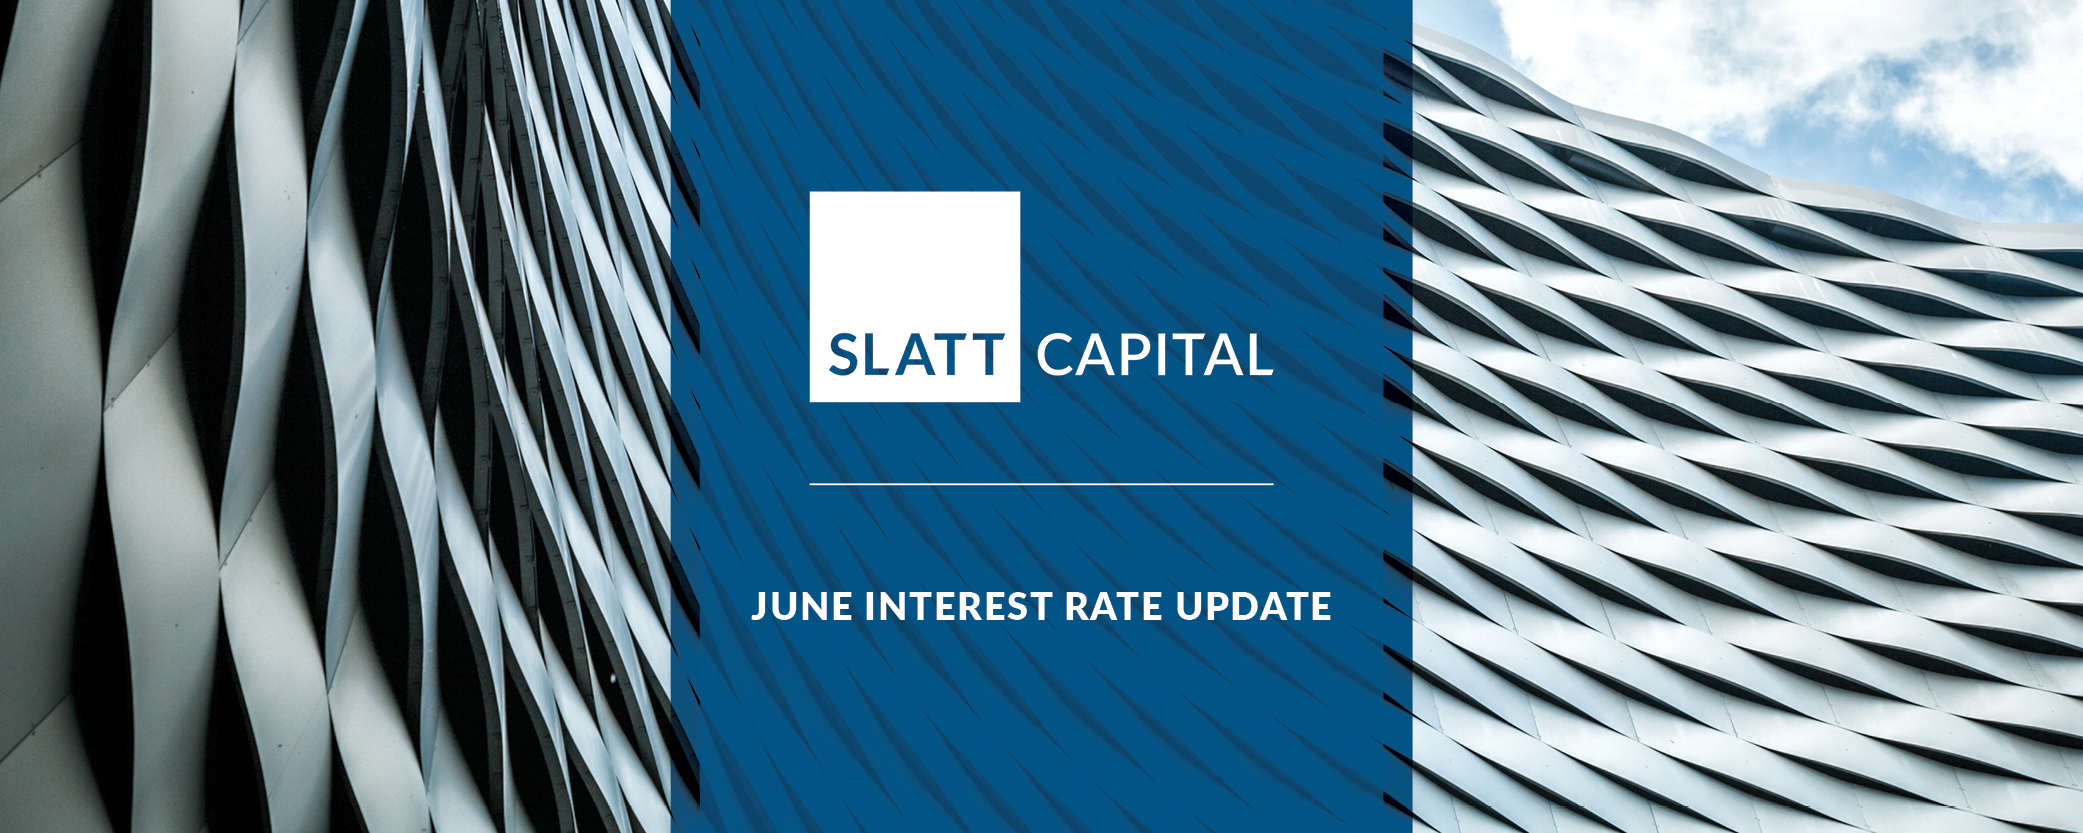 June interest rate update